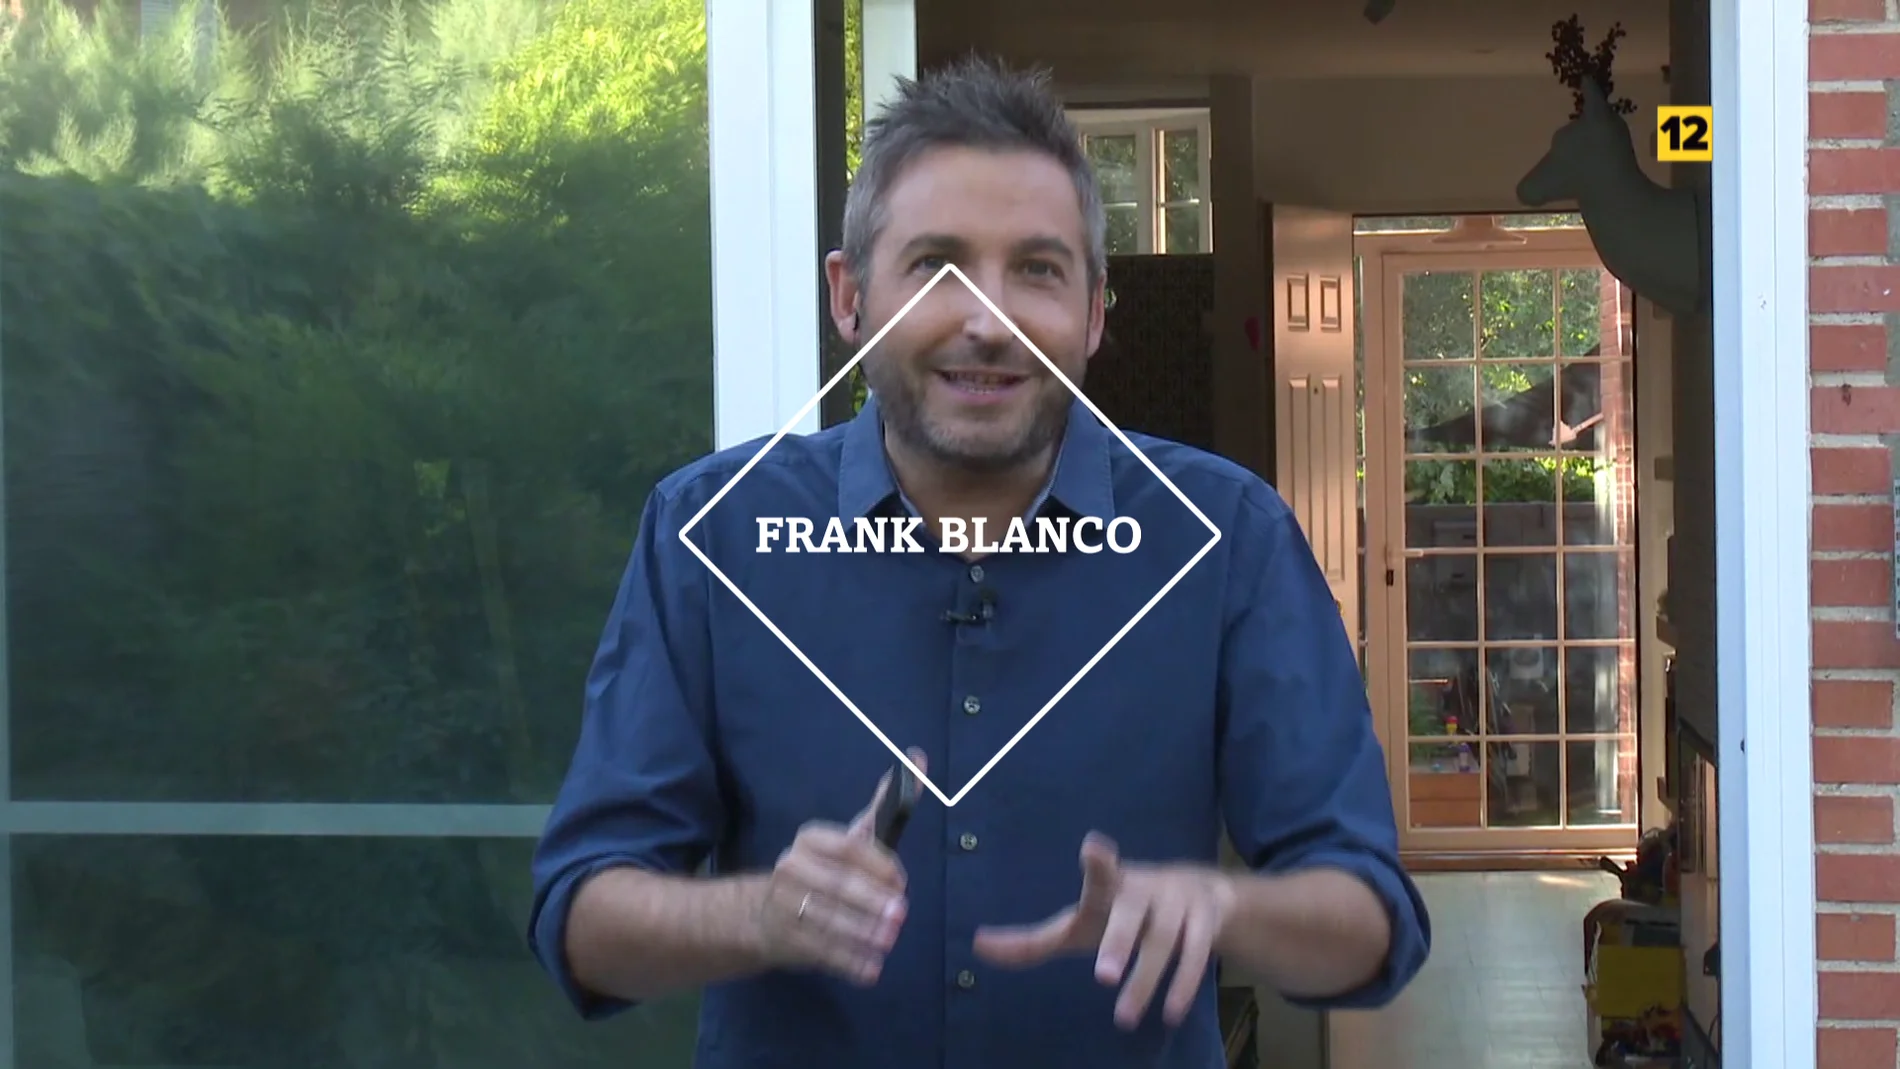 Frank Blanco